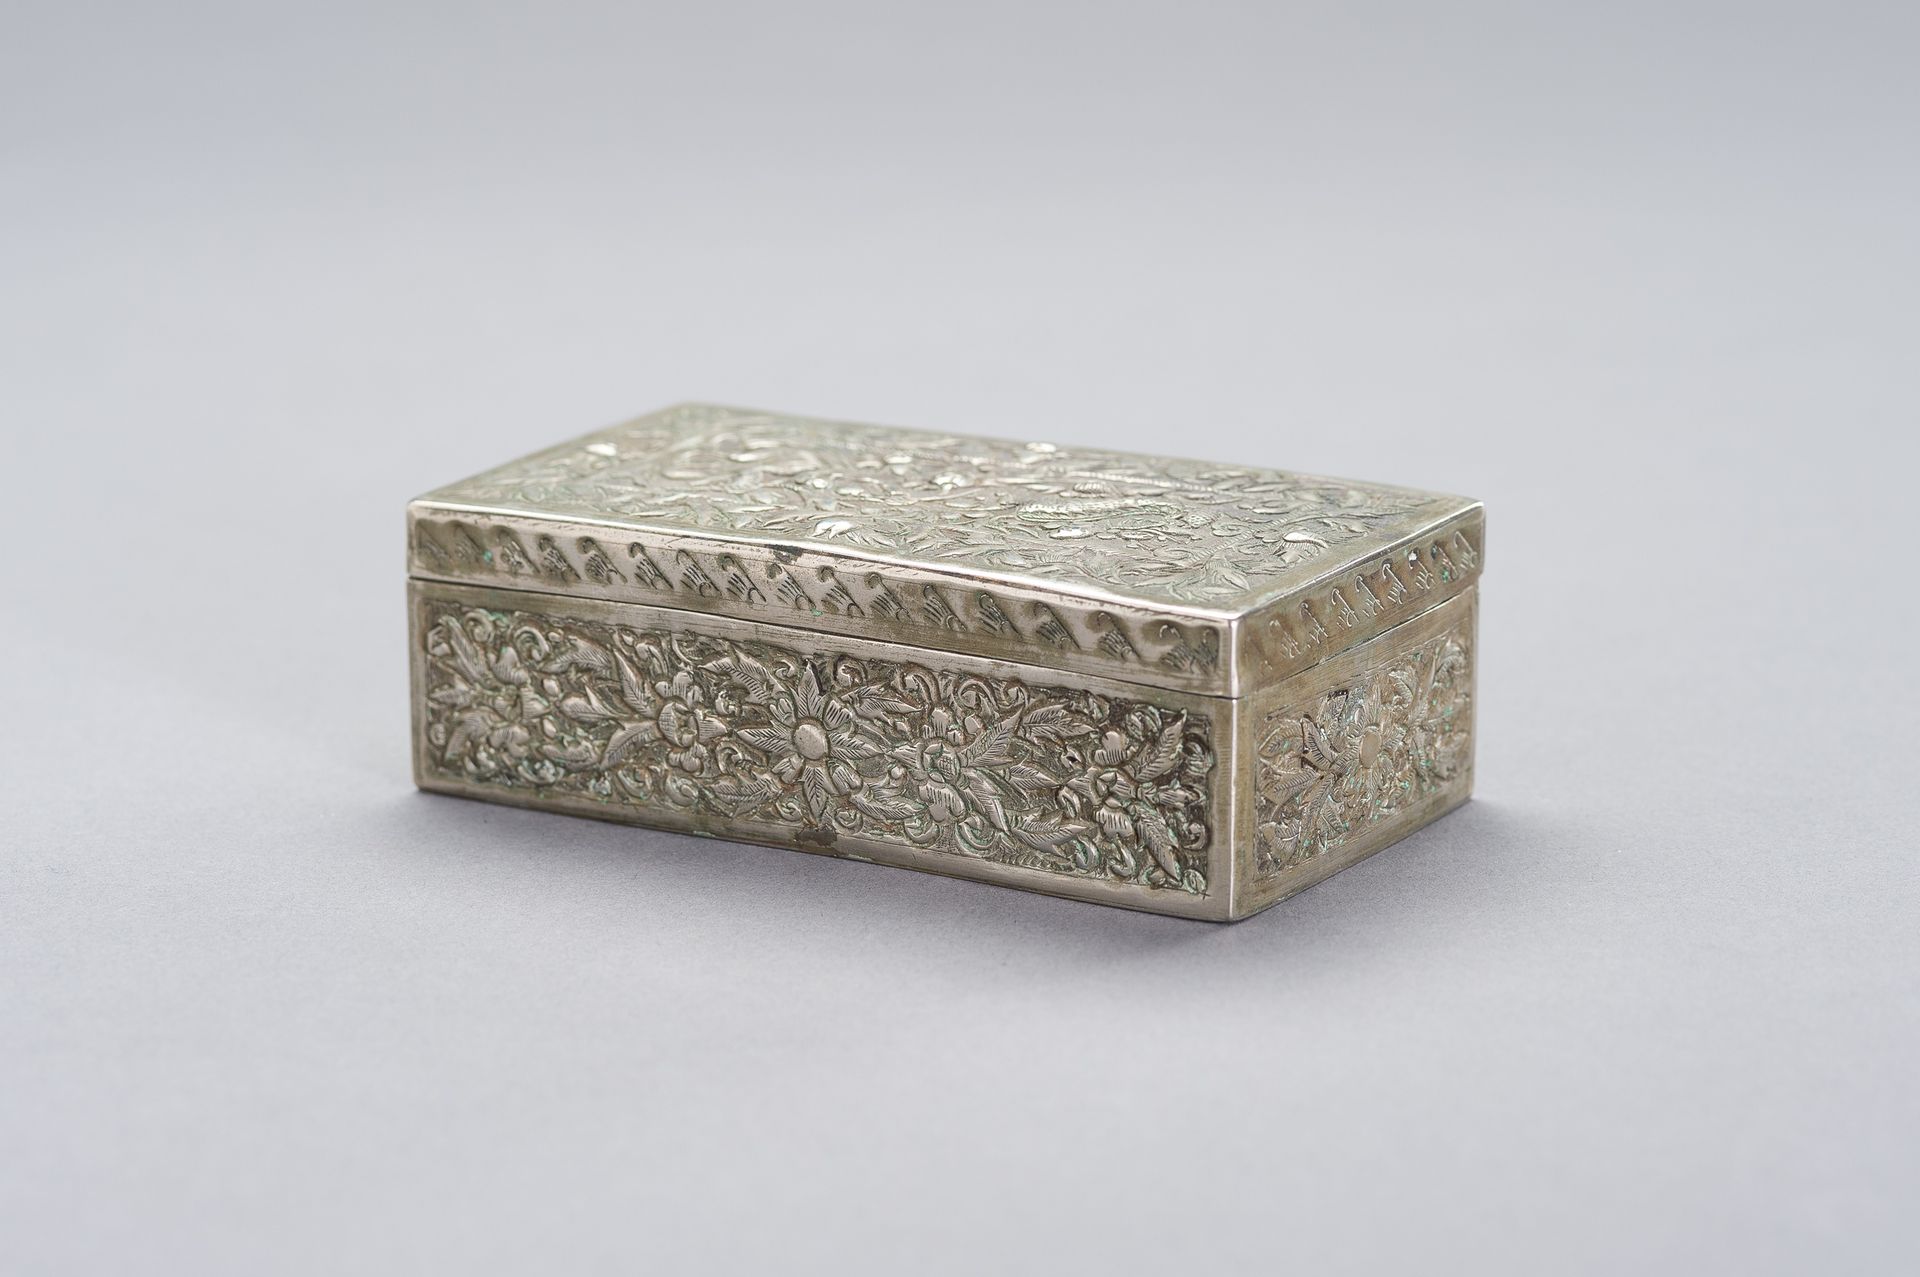 A SILVER-PLATED LIDDED BOX A SILVER-PLATED LIDDED BOX
Burma/ Myanmar c. 1900. Th&hellip;